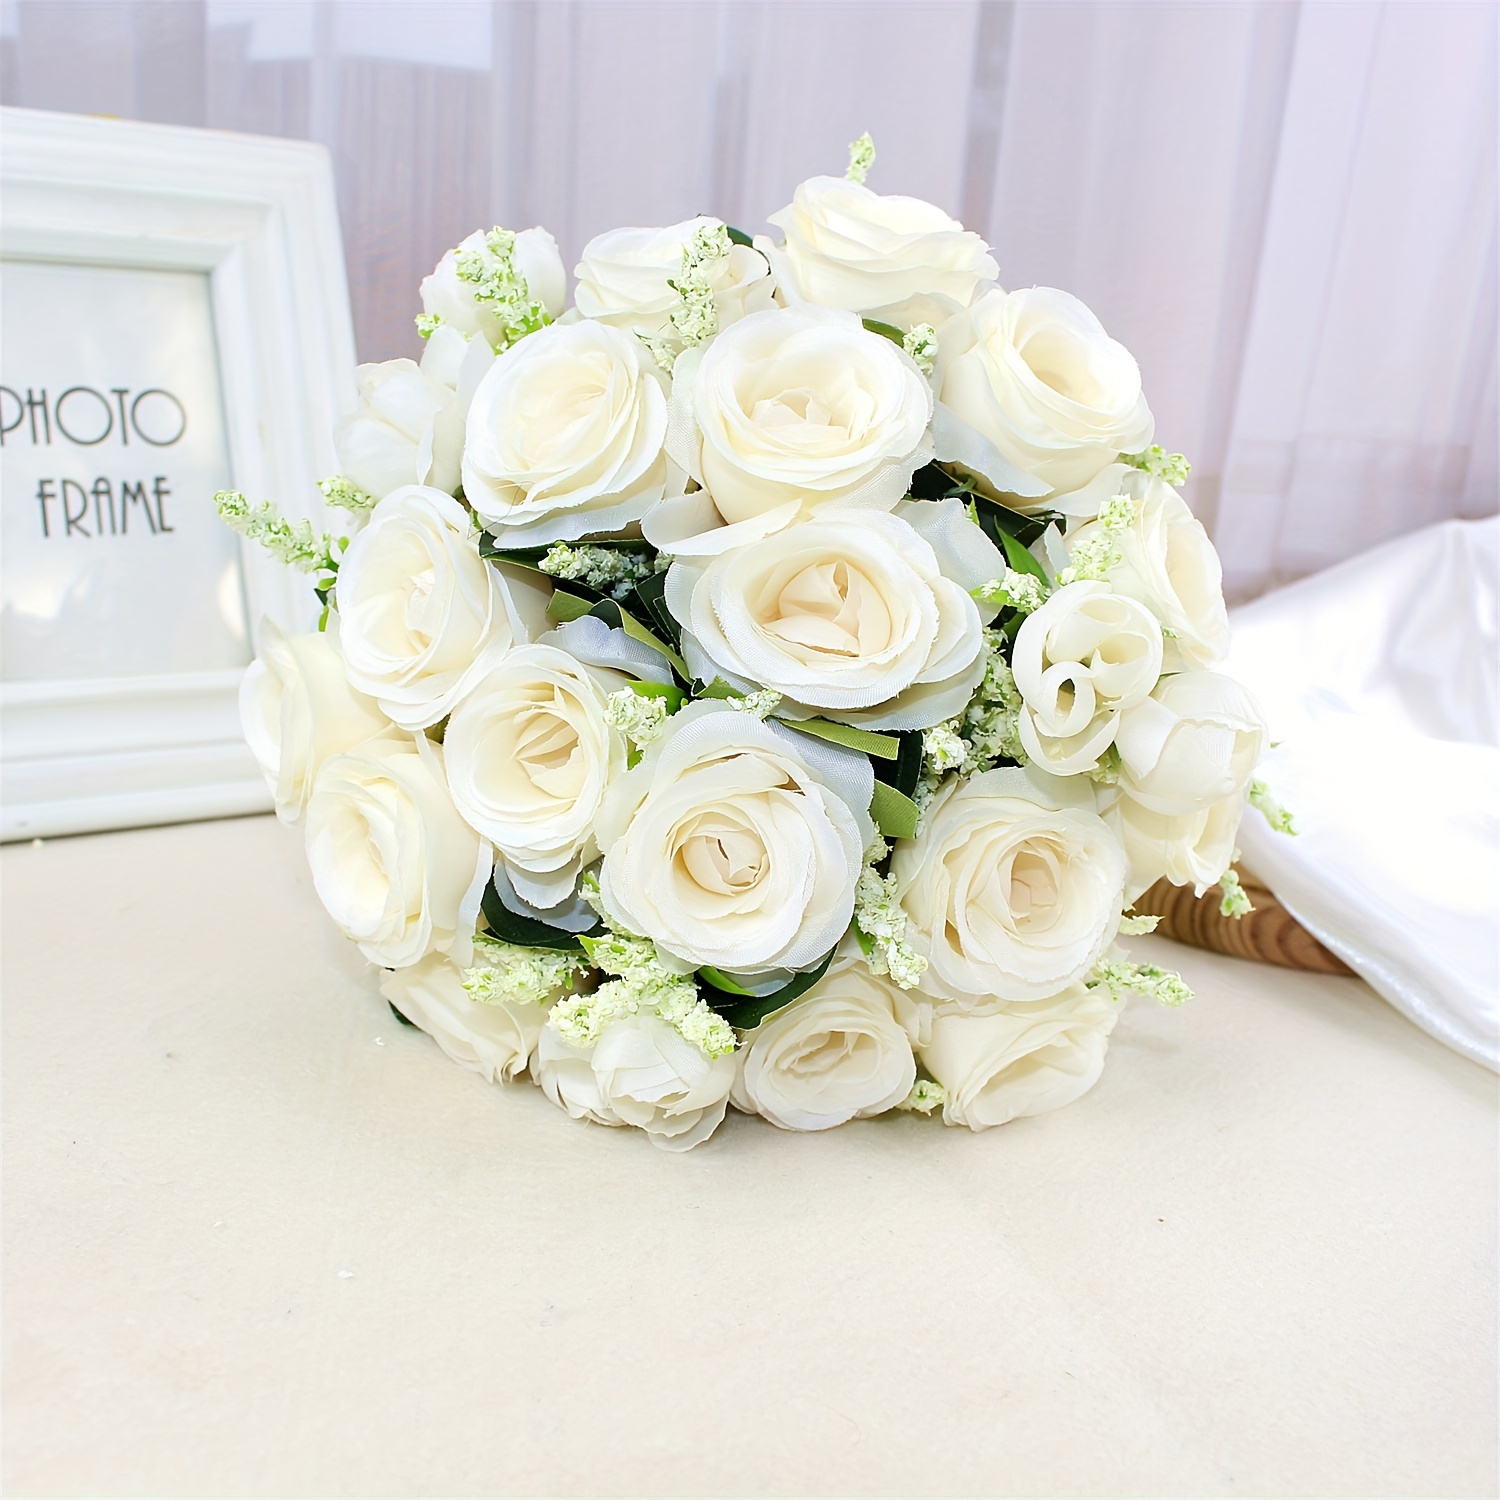 Miumaeov Artificial Wedding Bouquet, Bride Bridesmaid Bouquet Silk Flowers  with Diamonds Pearl for Home Office Parties Decoration Wedding Ceremony